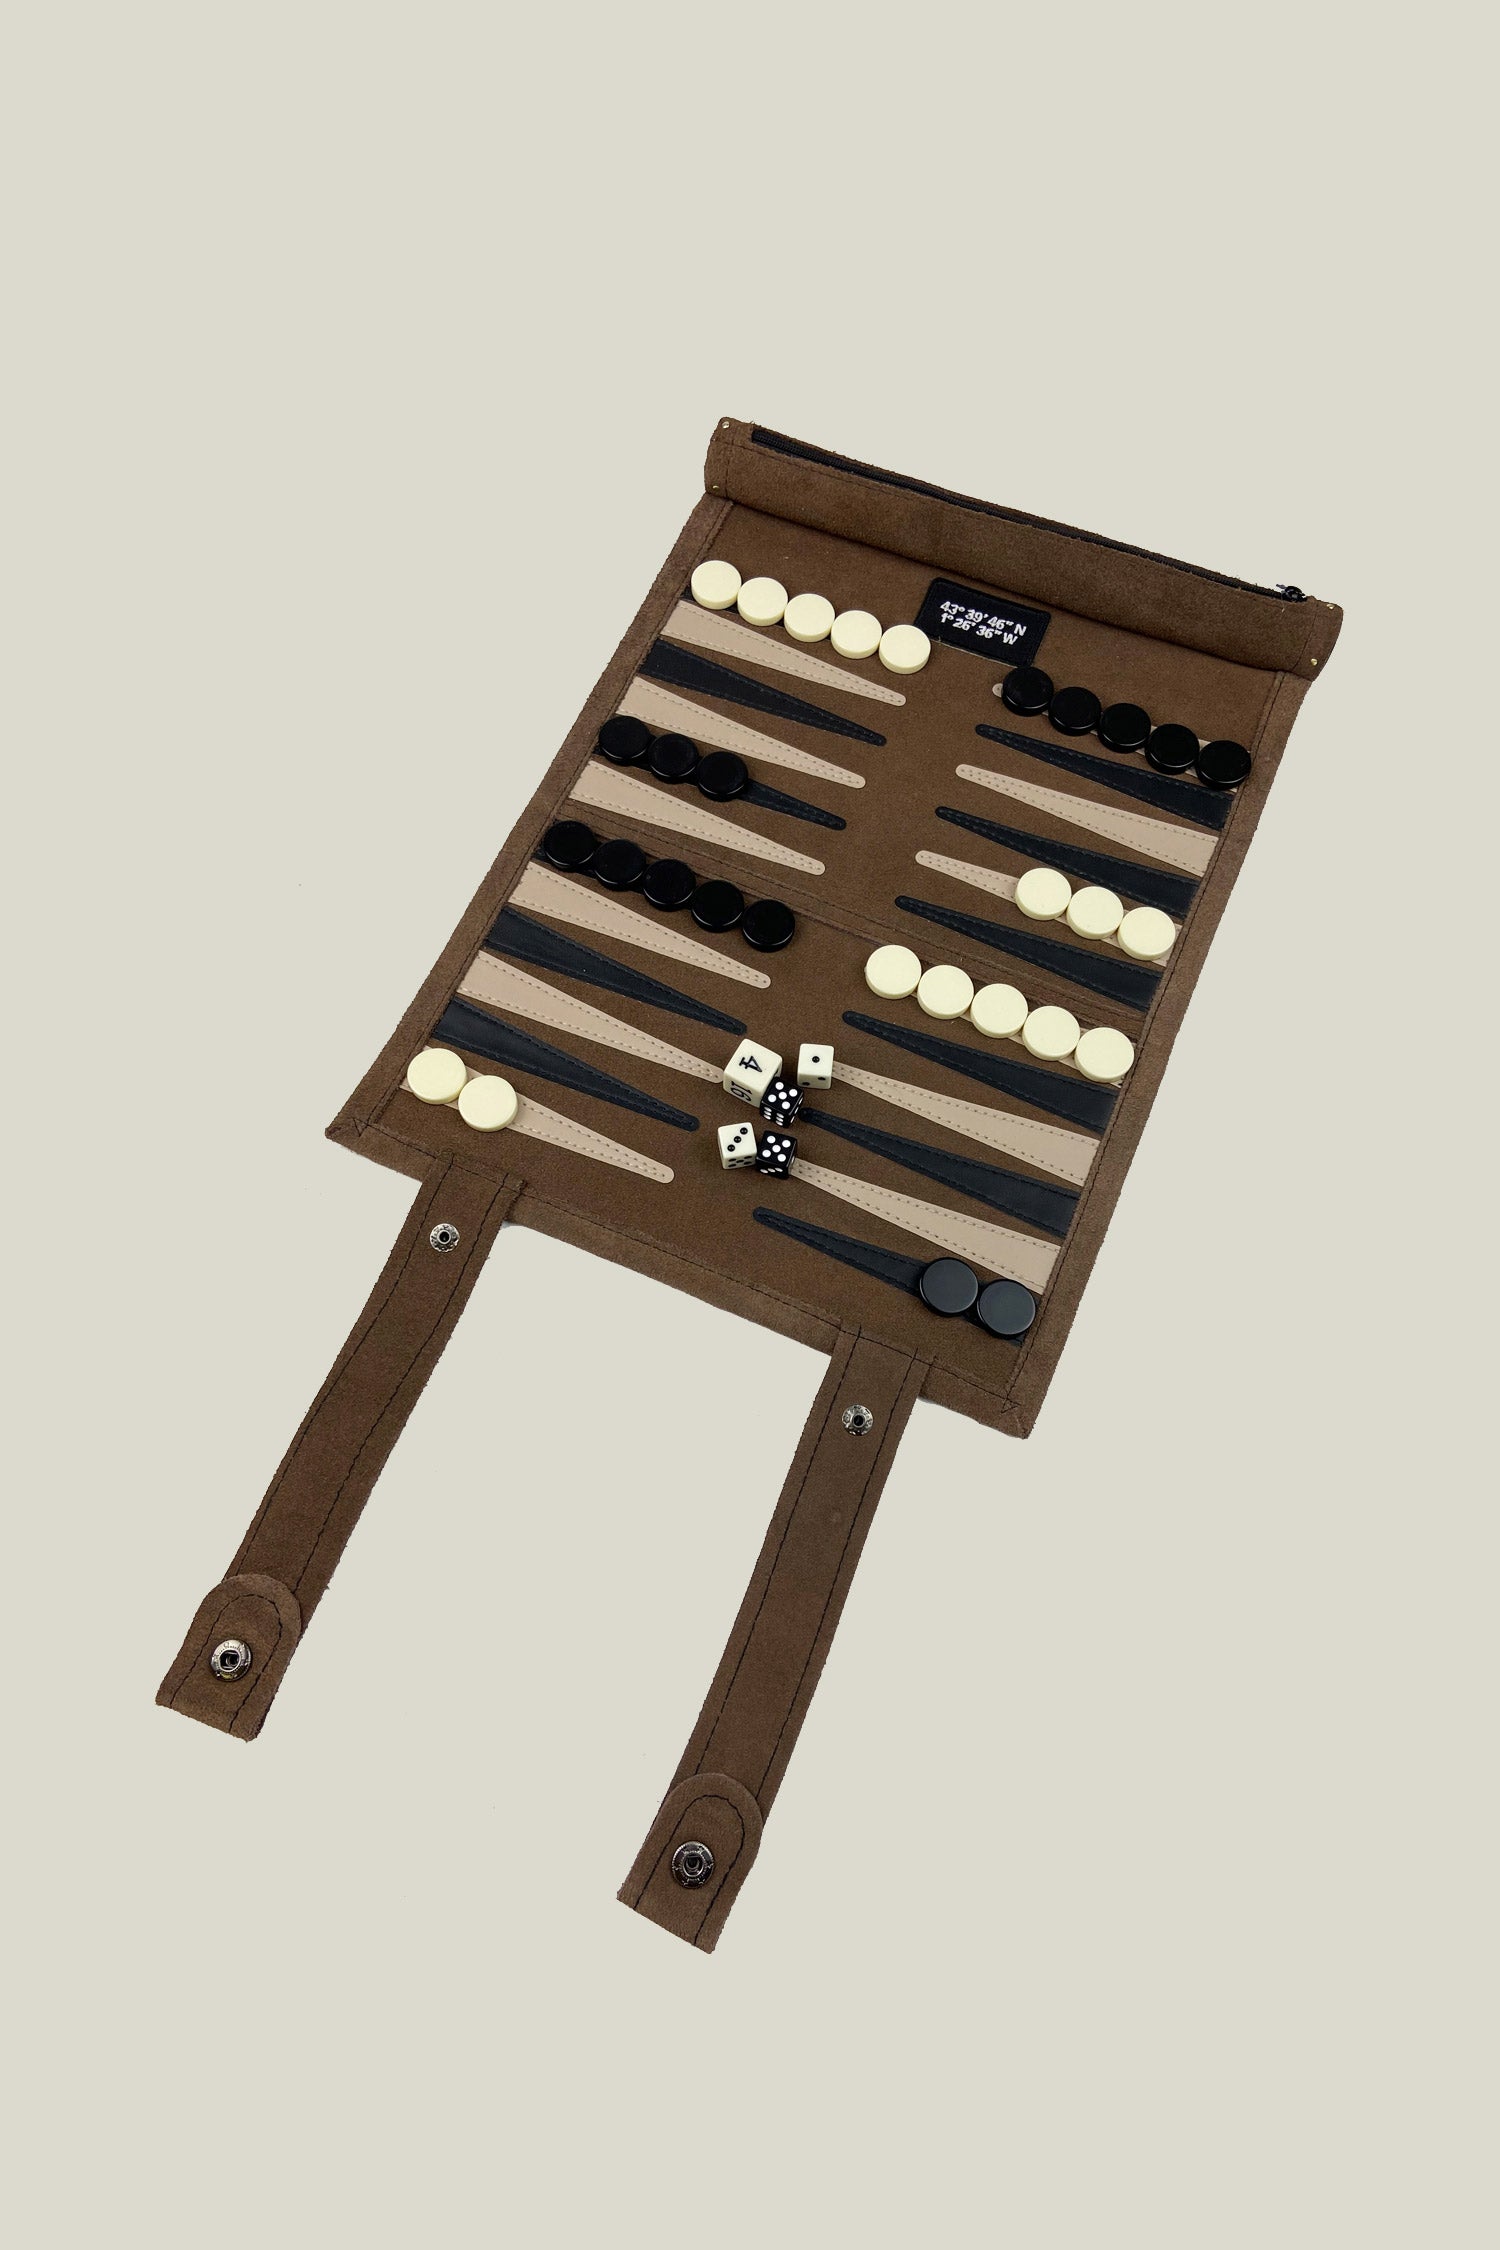 Backgammon "Travel" - Brown